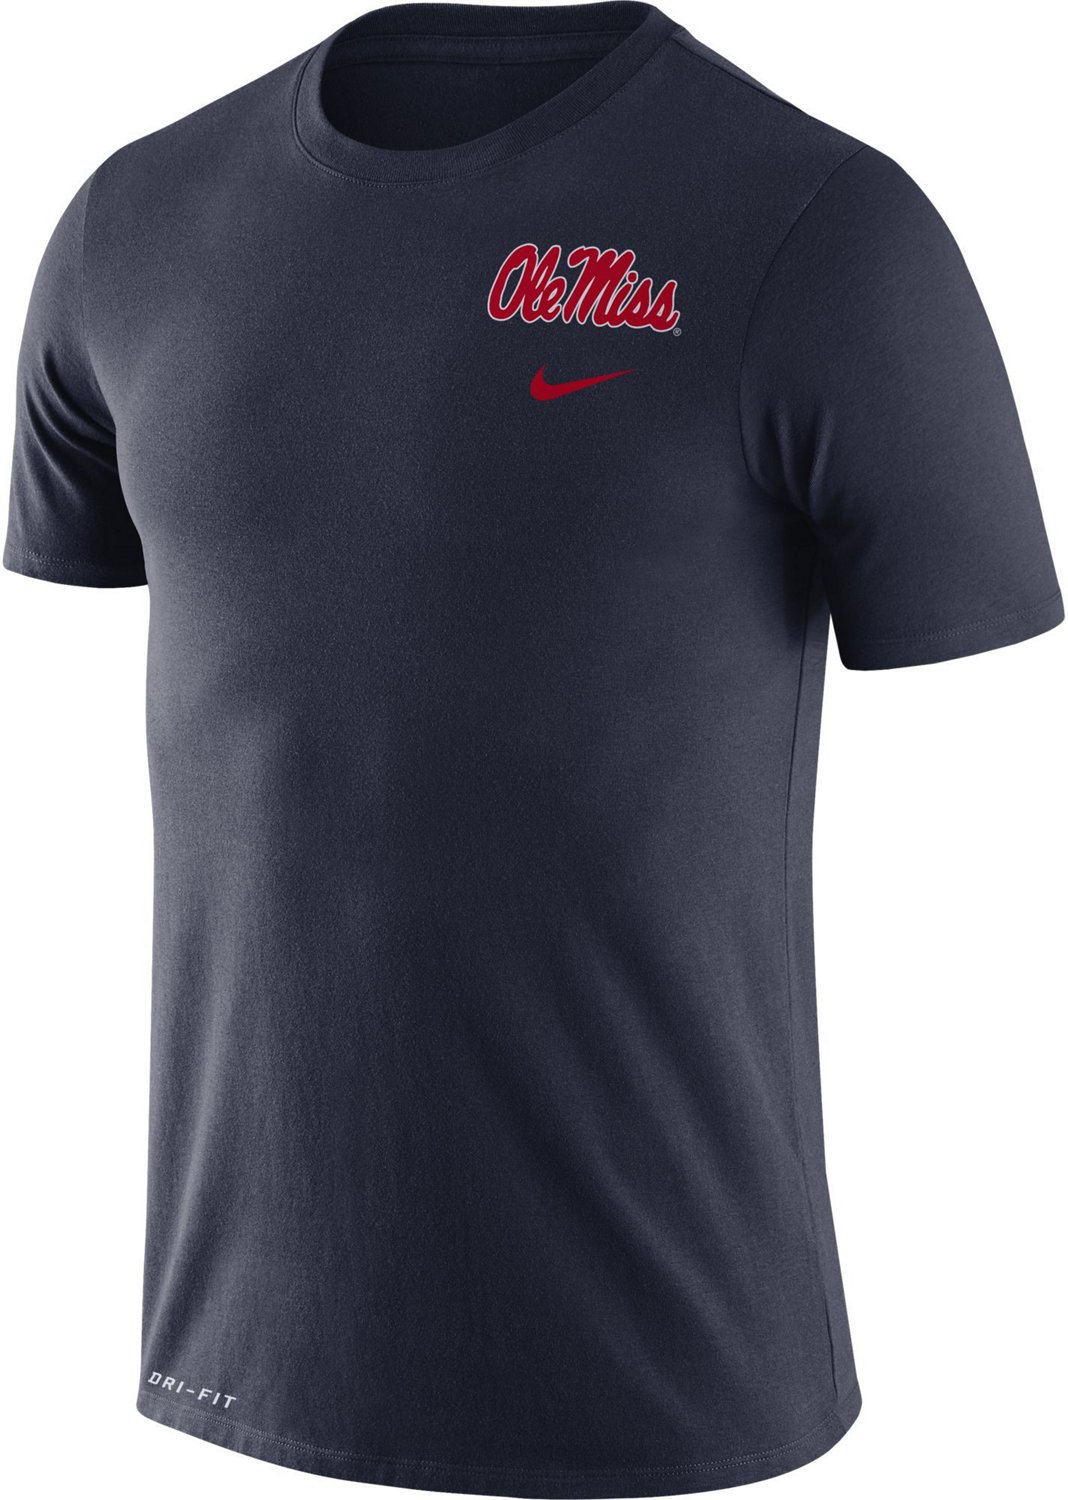 Nike Men's University of Mississippi Dri-FIT DNA Short Sleeve T-shirt ...